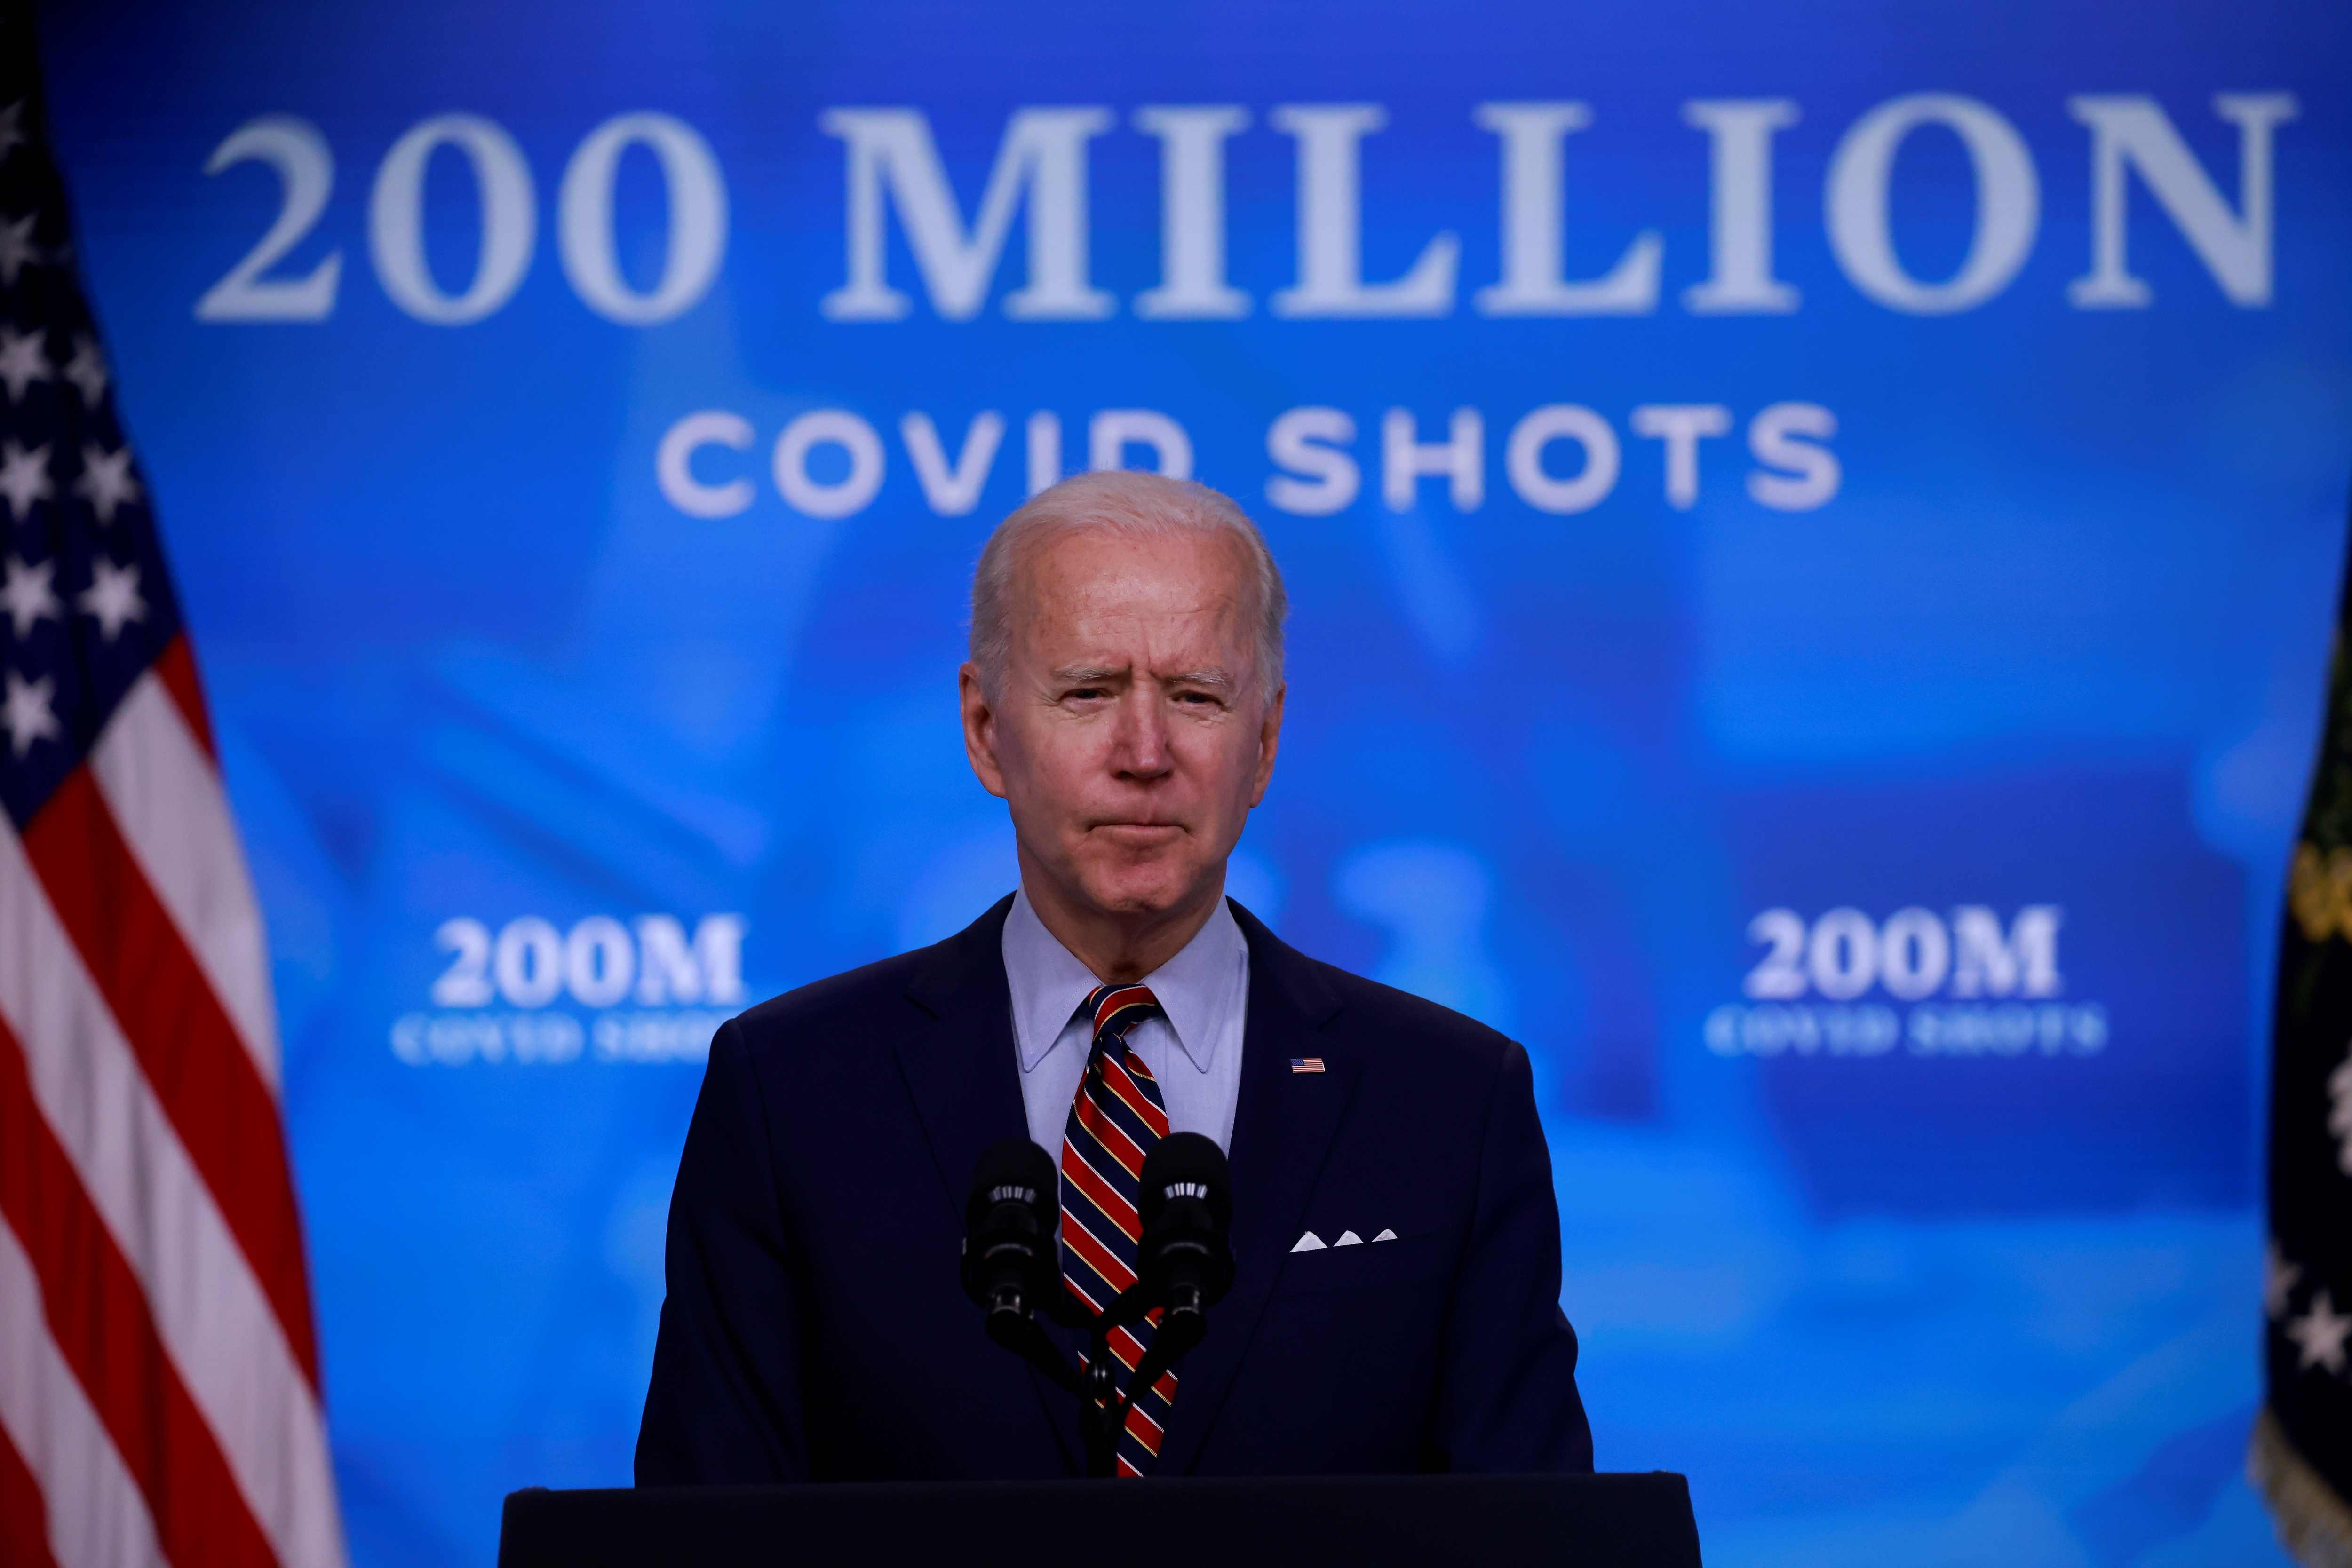 U.S. President Biden speaks about his administration's coronavirus response at the White House in Washington